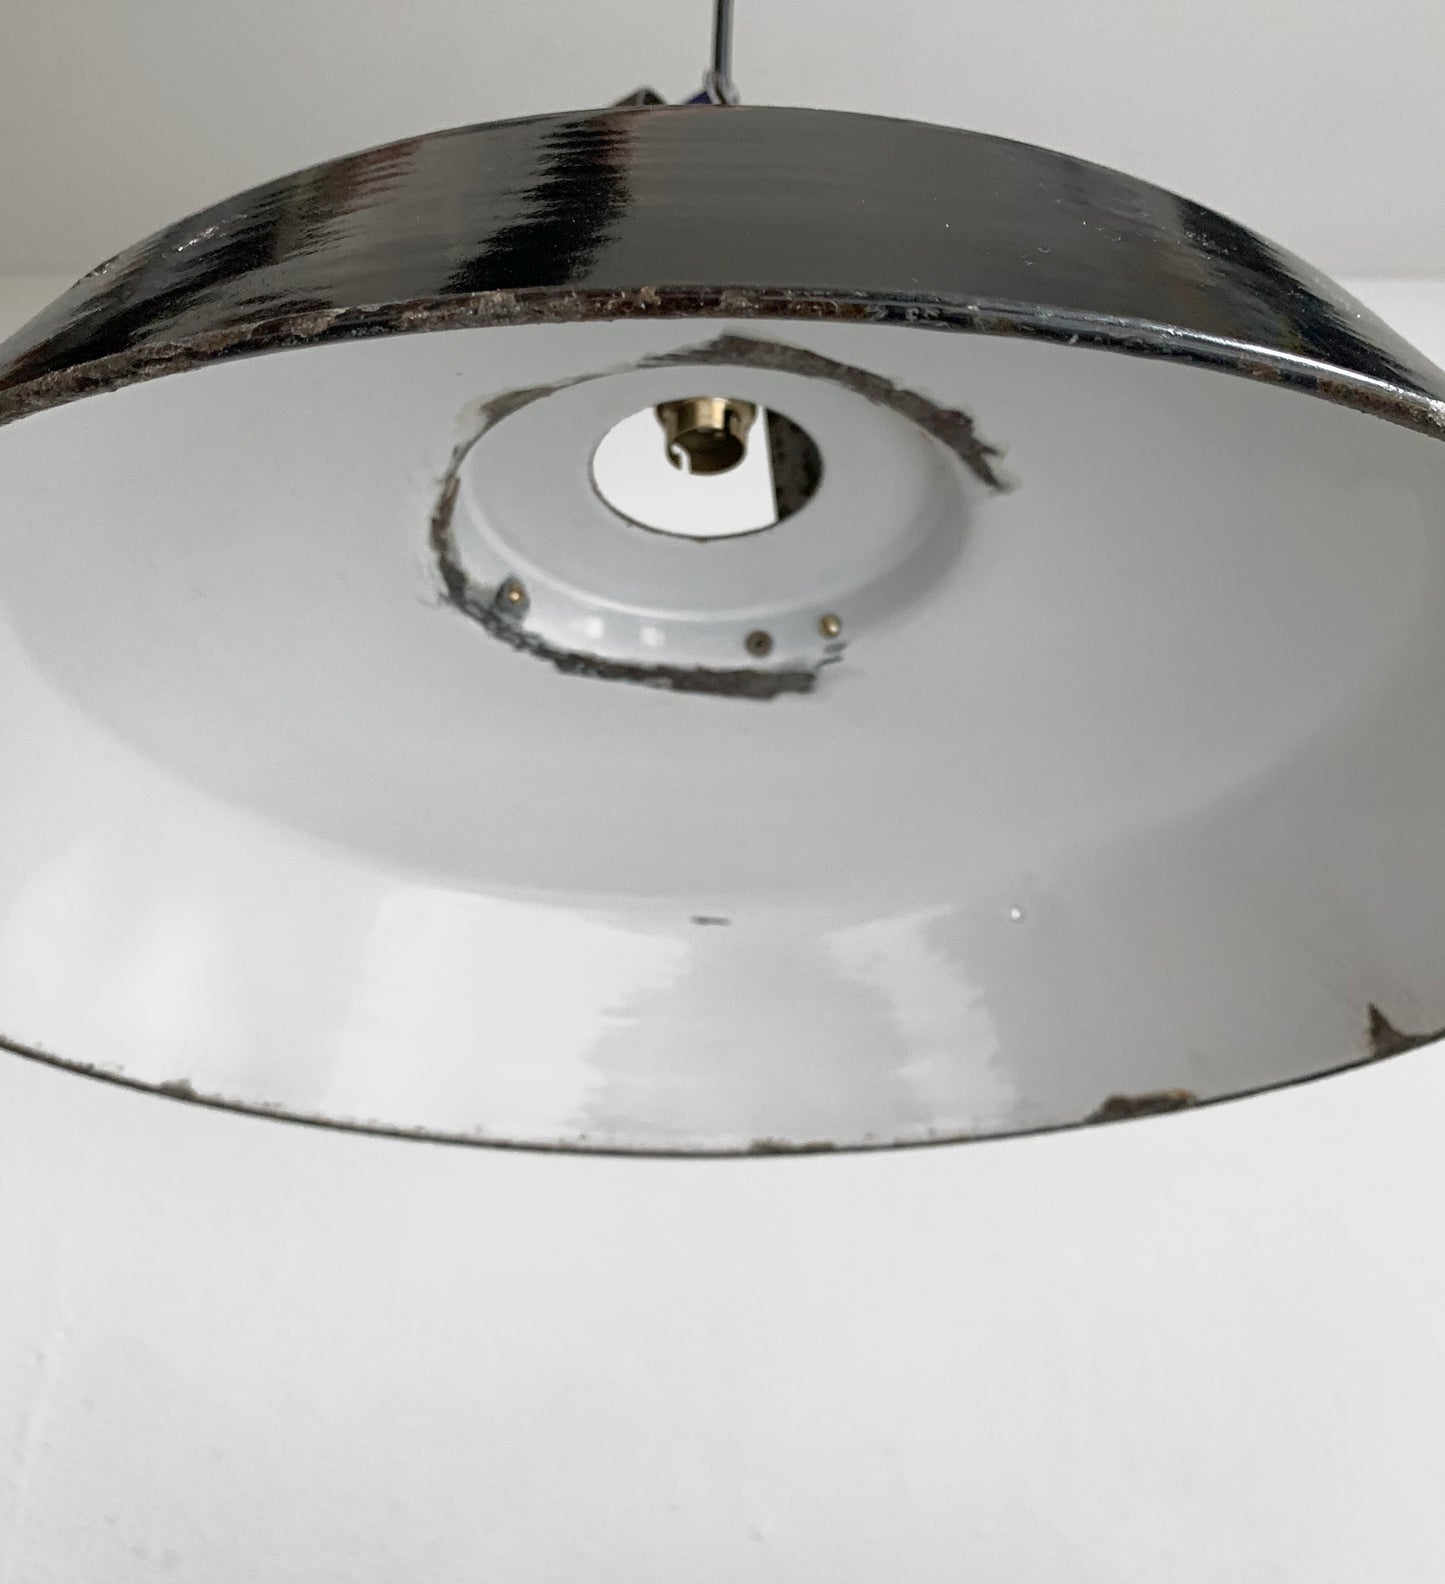 Large Vintage French Black Enamel Industrial Pendant Lamp - Light / 45cm Across